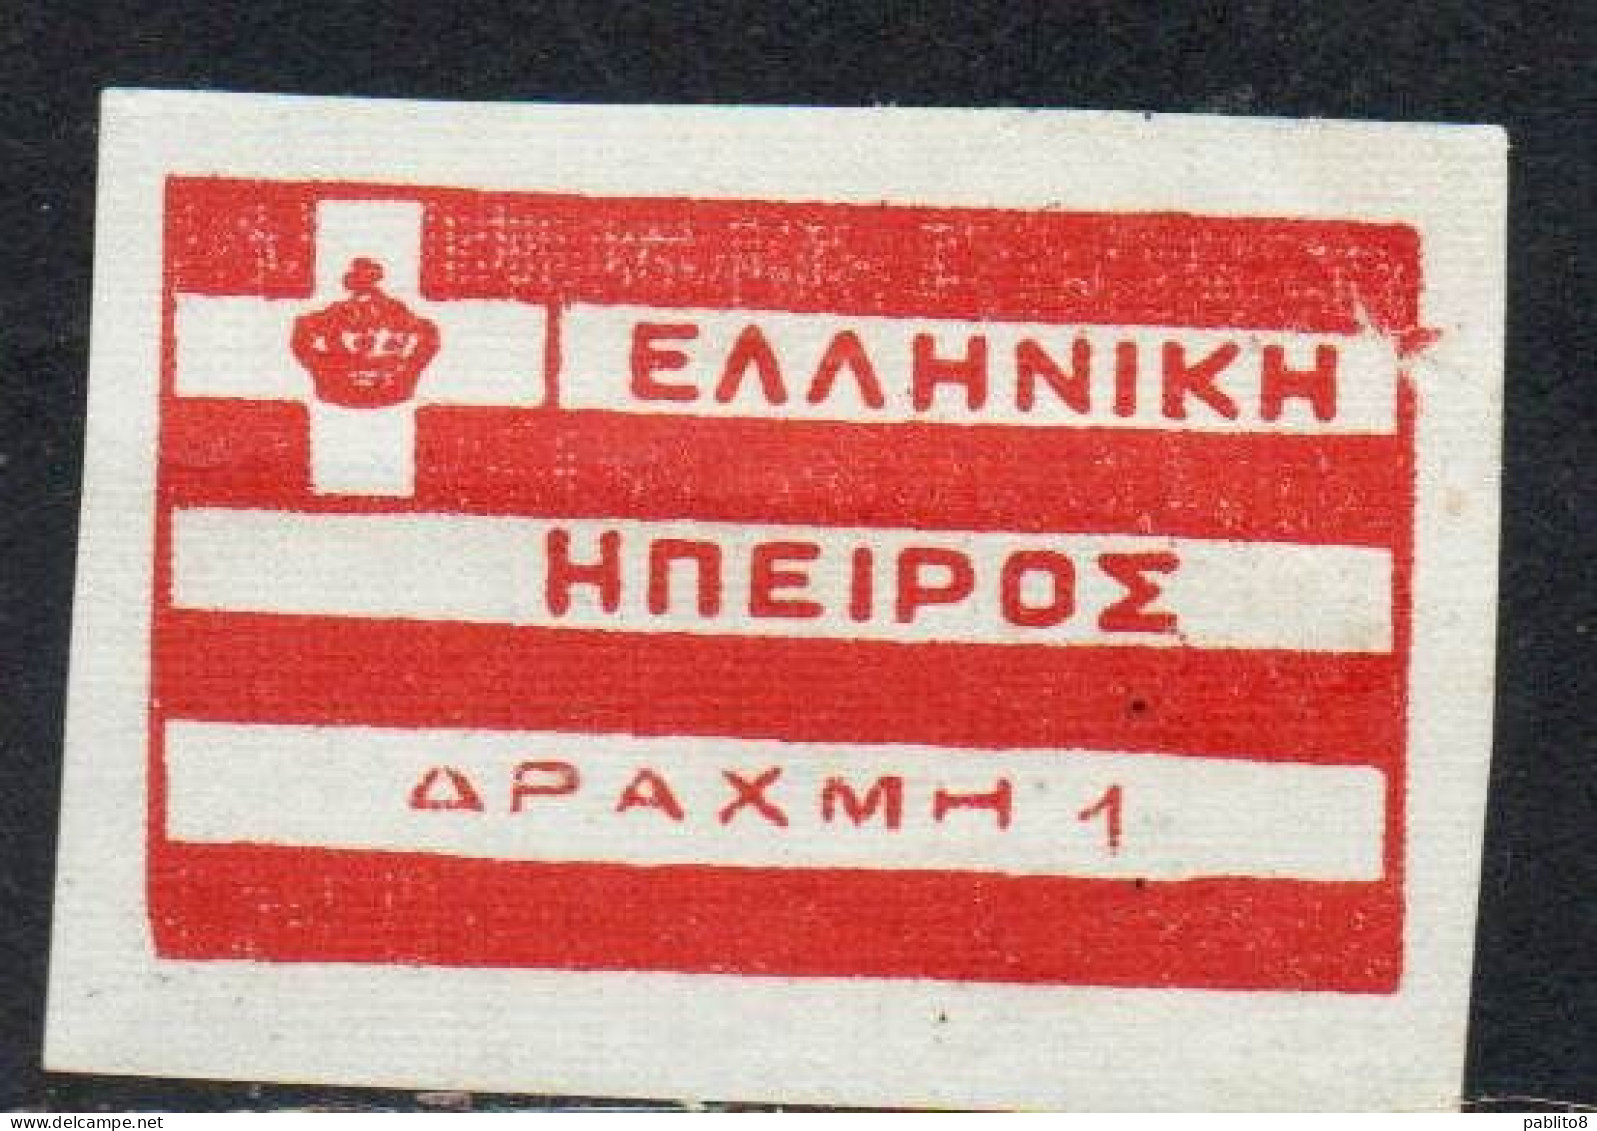 GREECE GRECIA HELLAS EPIRUS EPIRO 1914 FLAG LOCAL ISSUE 1d MNH - Epirus & Albanie